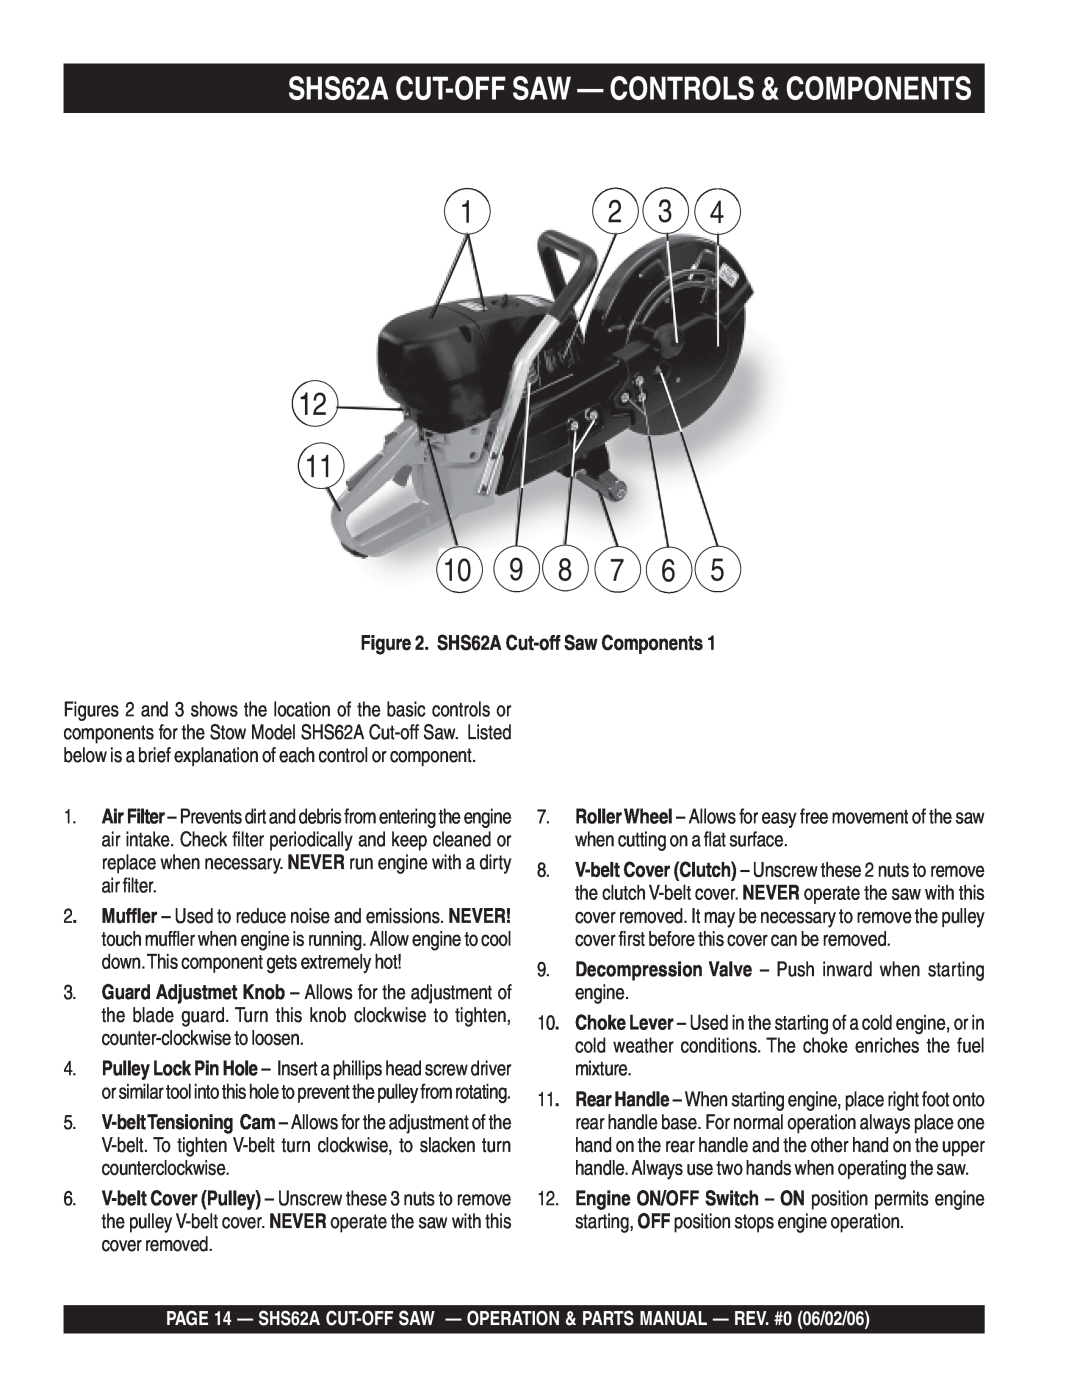 Stow manual 10 9 8 7 6, SHS62A CUT-OFF SAW - CONTROLS & COMPONENTS, SHS62A Cut-off Saw Components 